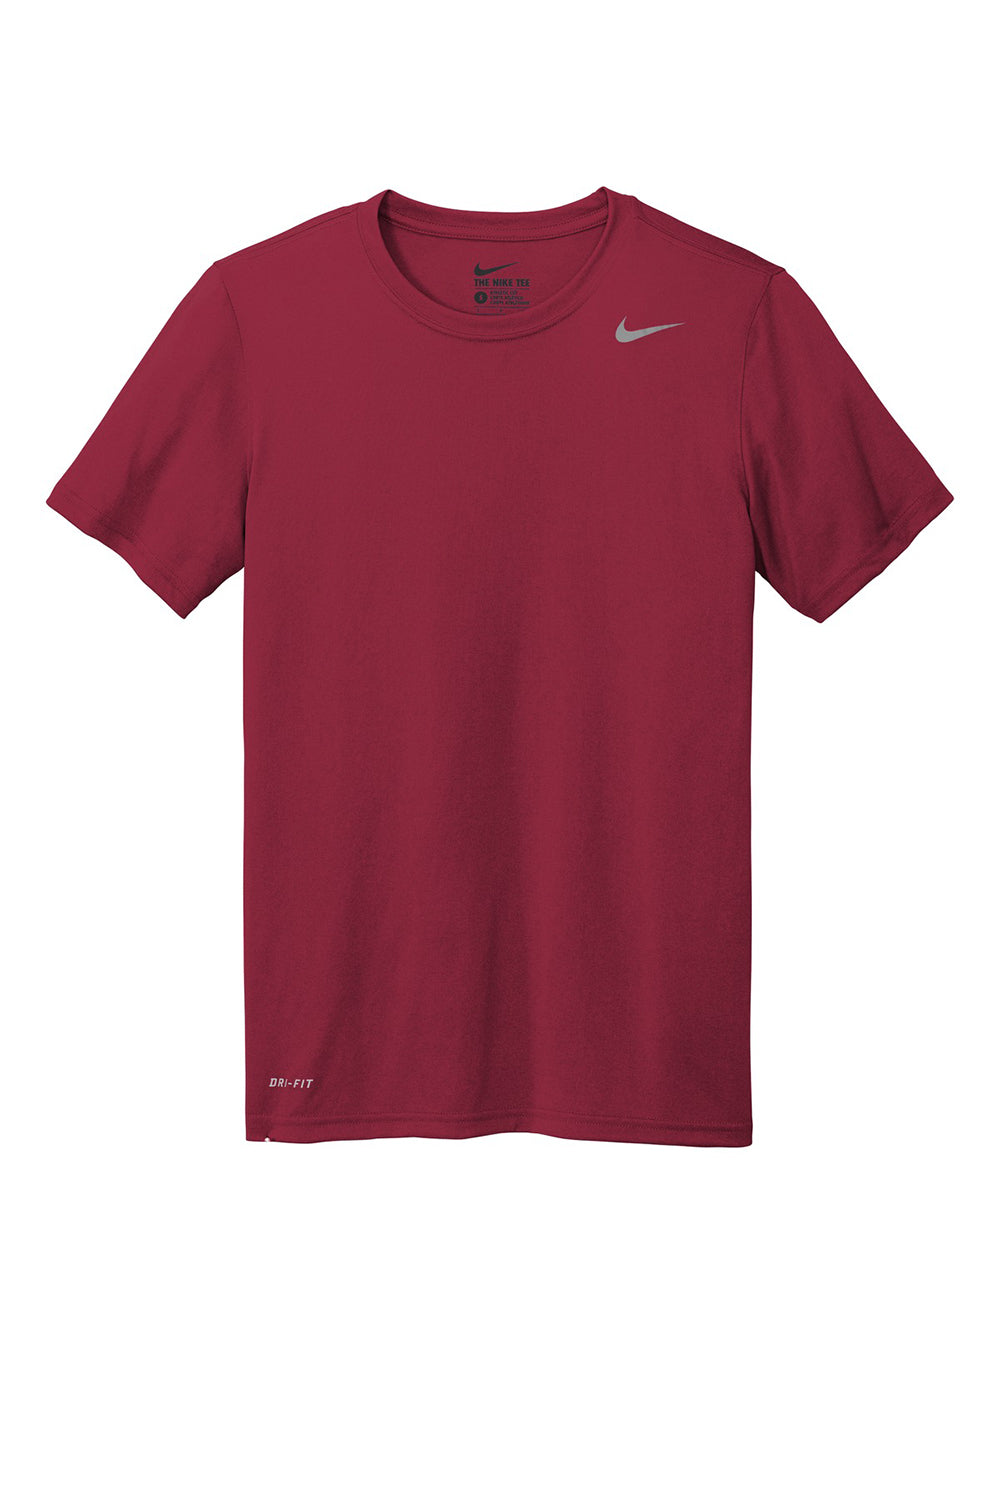 Nike 727982 Mens Legend Dri-Fit Moisture Wicking Short Sleeve Crewneck T-Shirt Team Maroon Flat Front